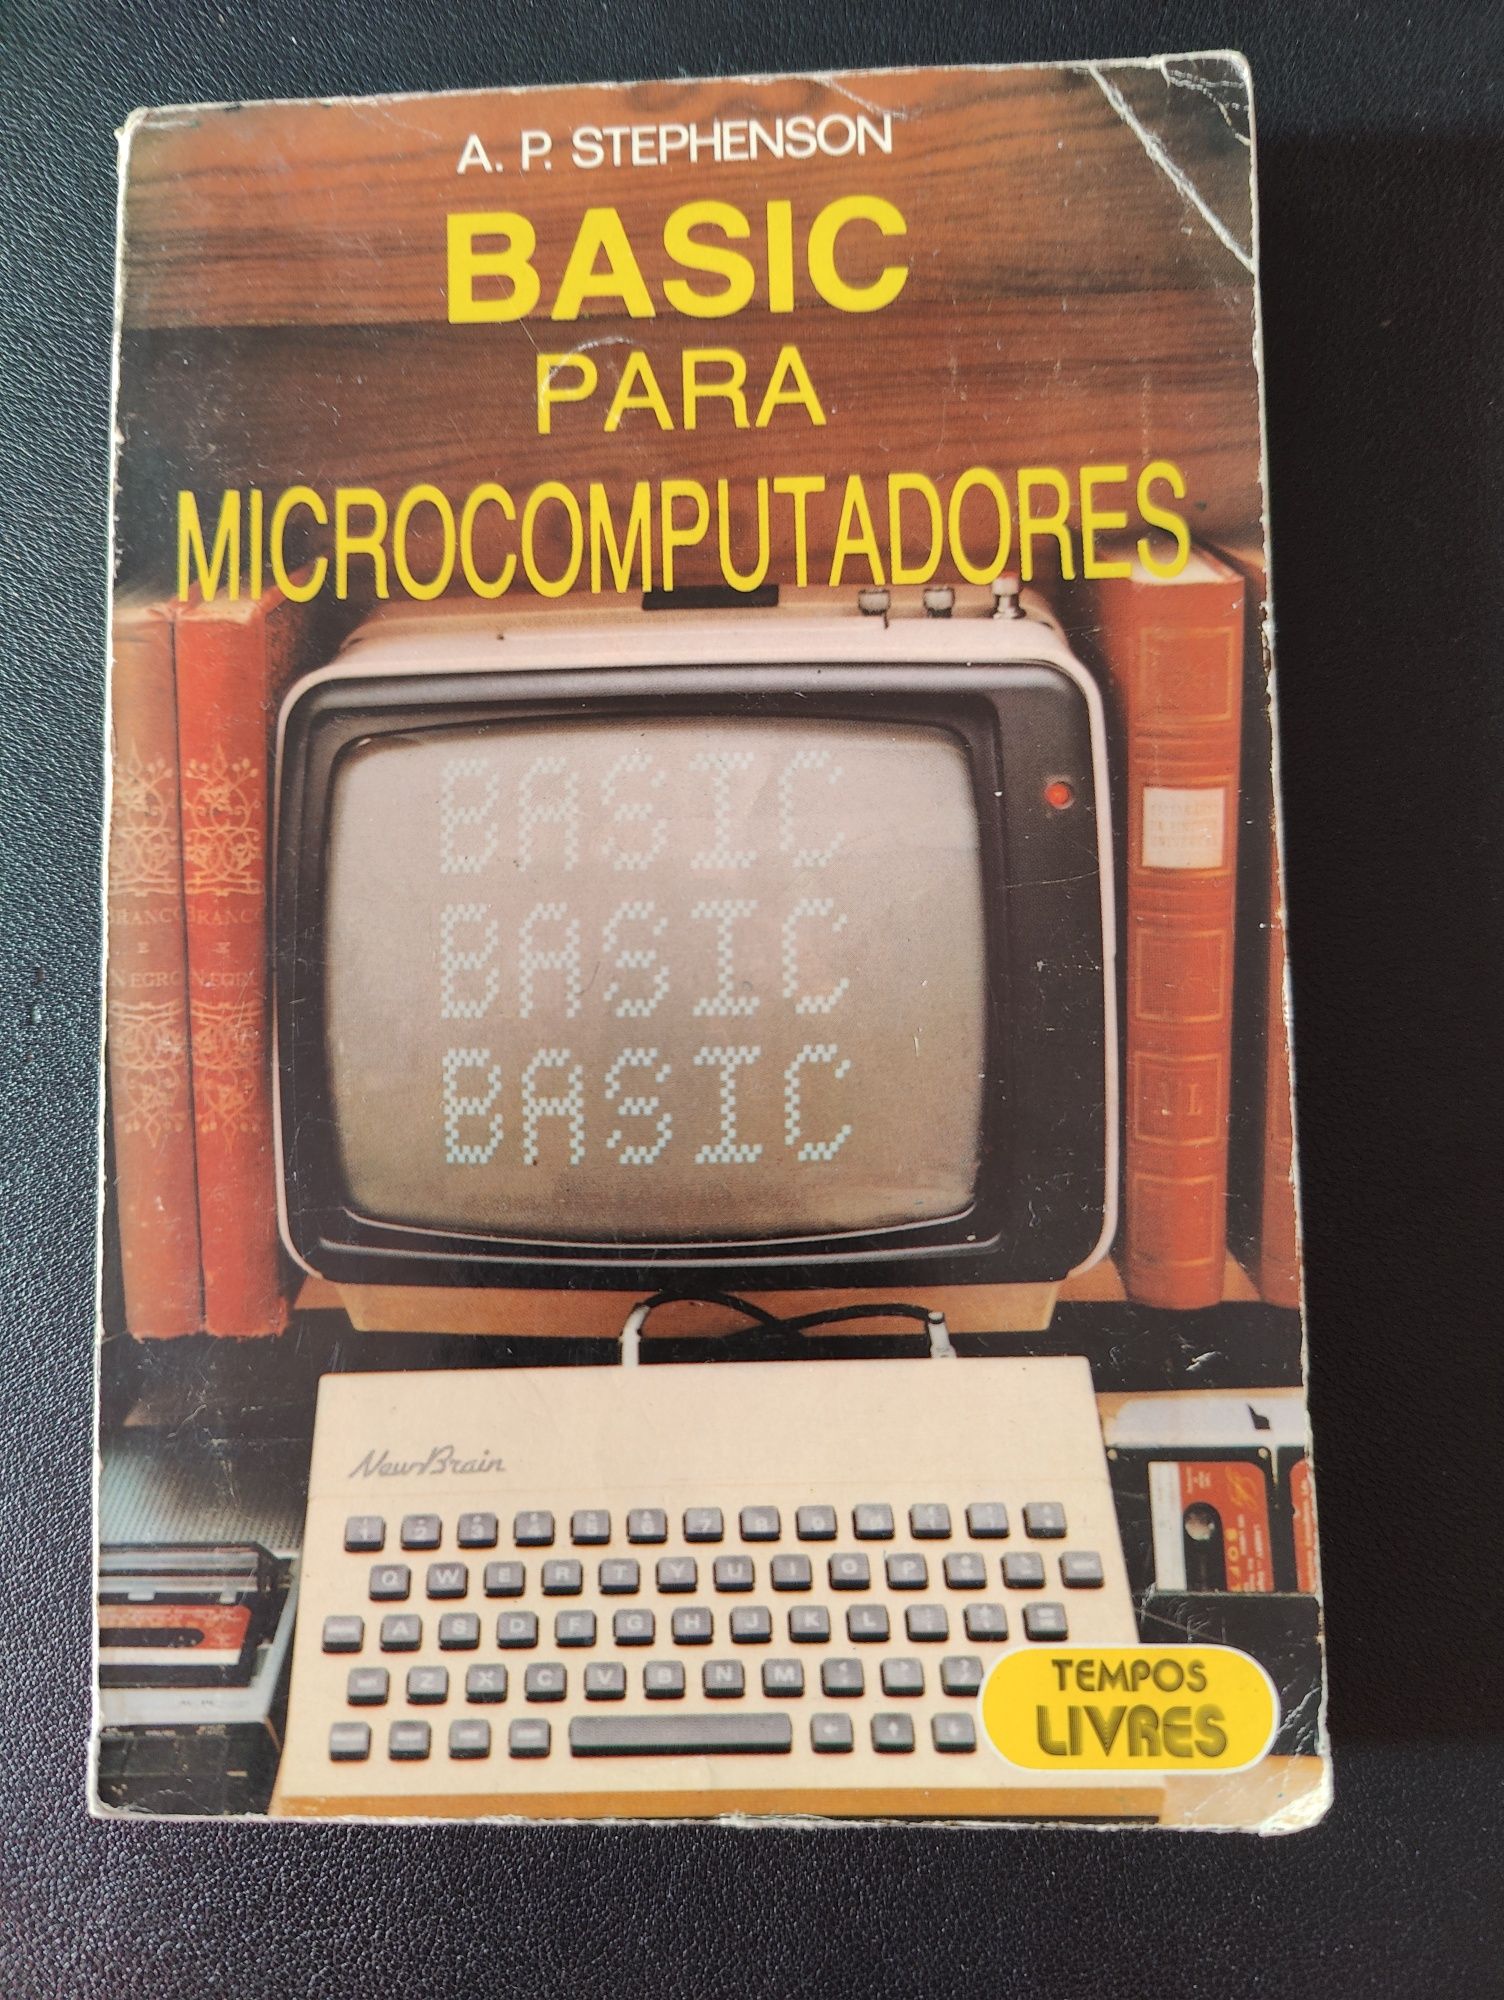 Basic para microcomputadores